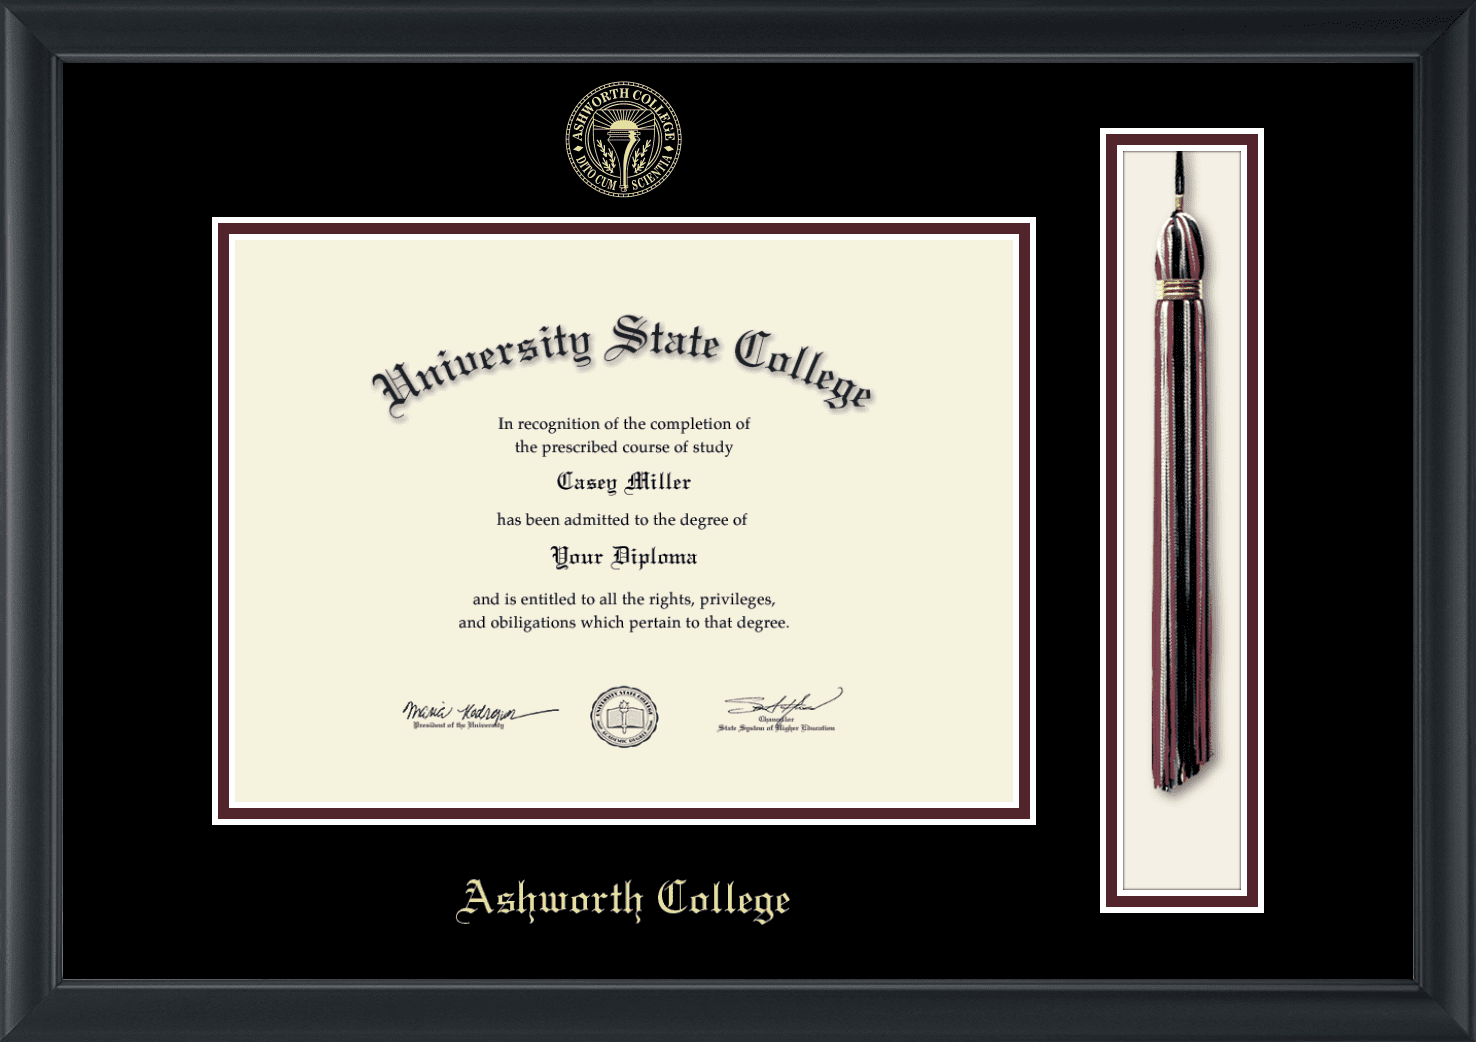 Ashworth College Tassel Diploma Frame, Document Size 11/